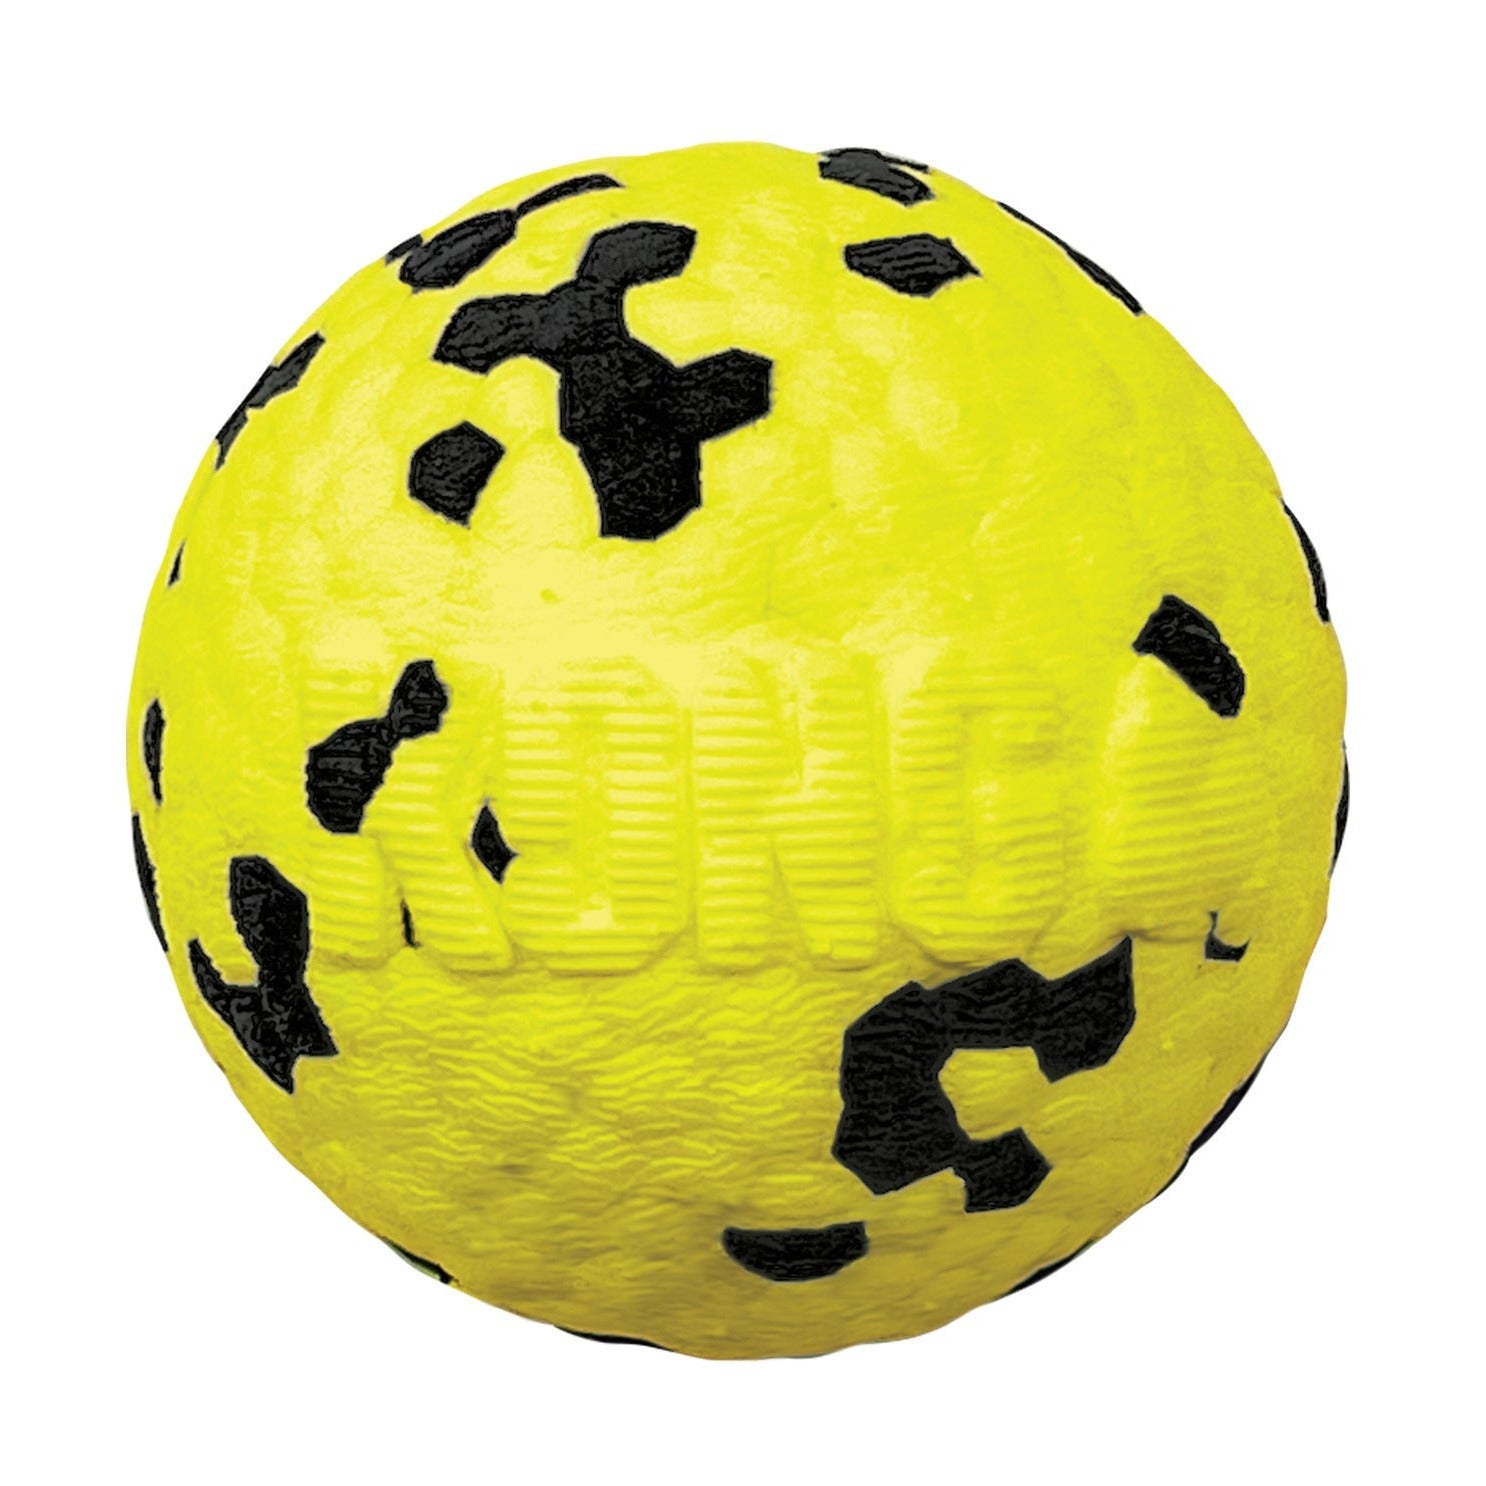 Reflex Ball - Pelota de Juguete para Perros de Kong